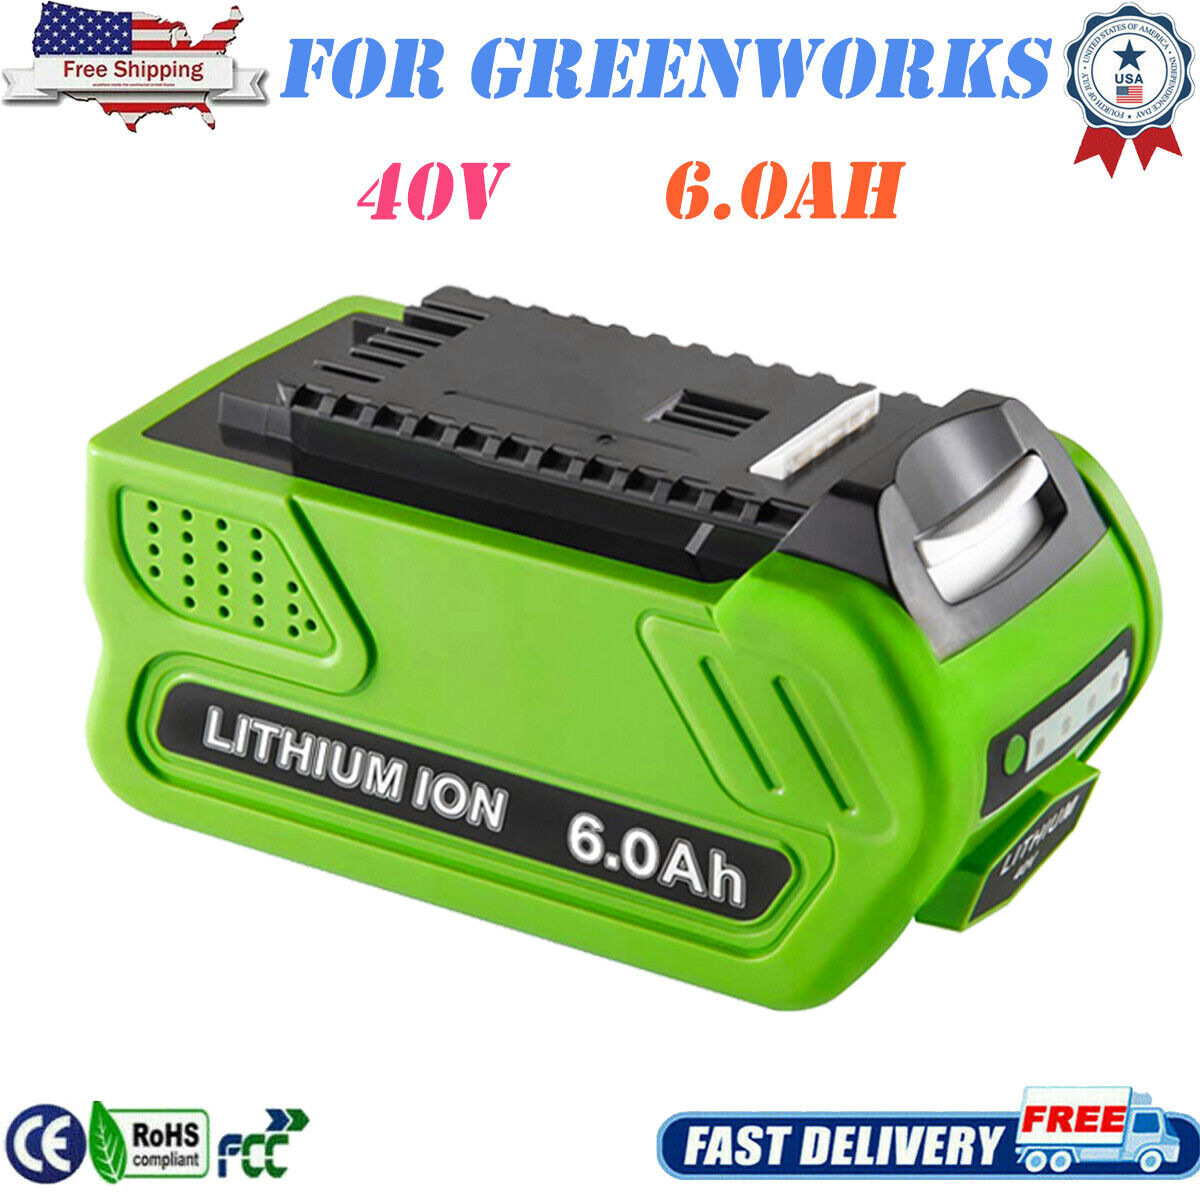 40V 6.0Ah G-MAX Li-ion Battery or Charger For Greenworks 29472 29462 29252 20202